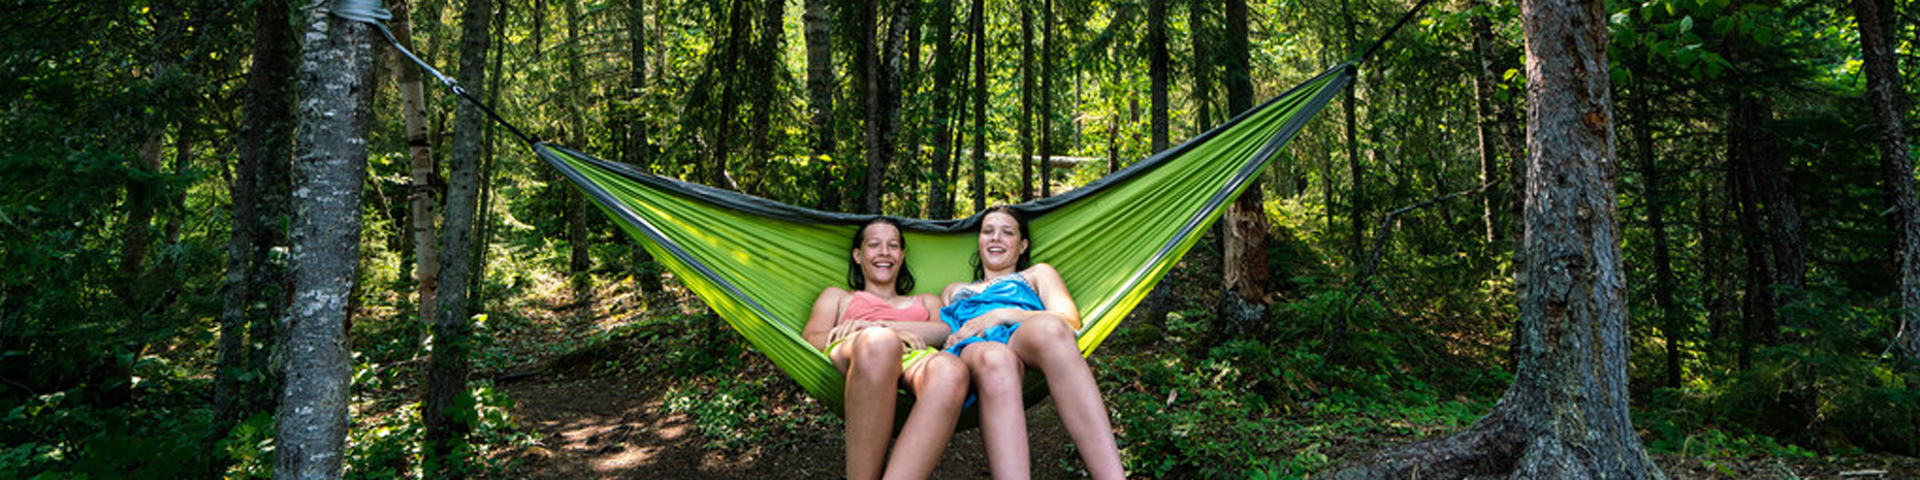 Two girls sitting in a hammock.